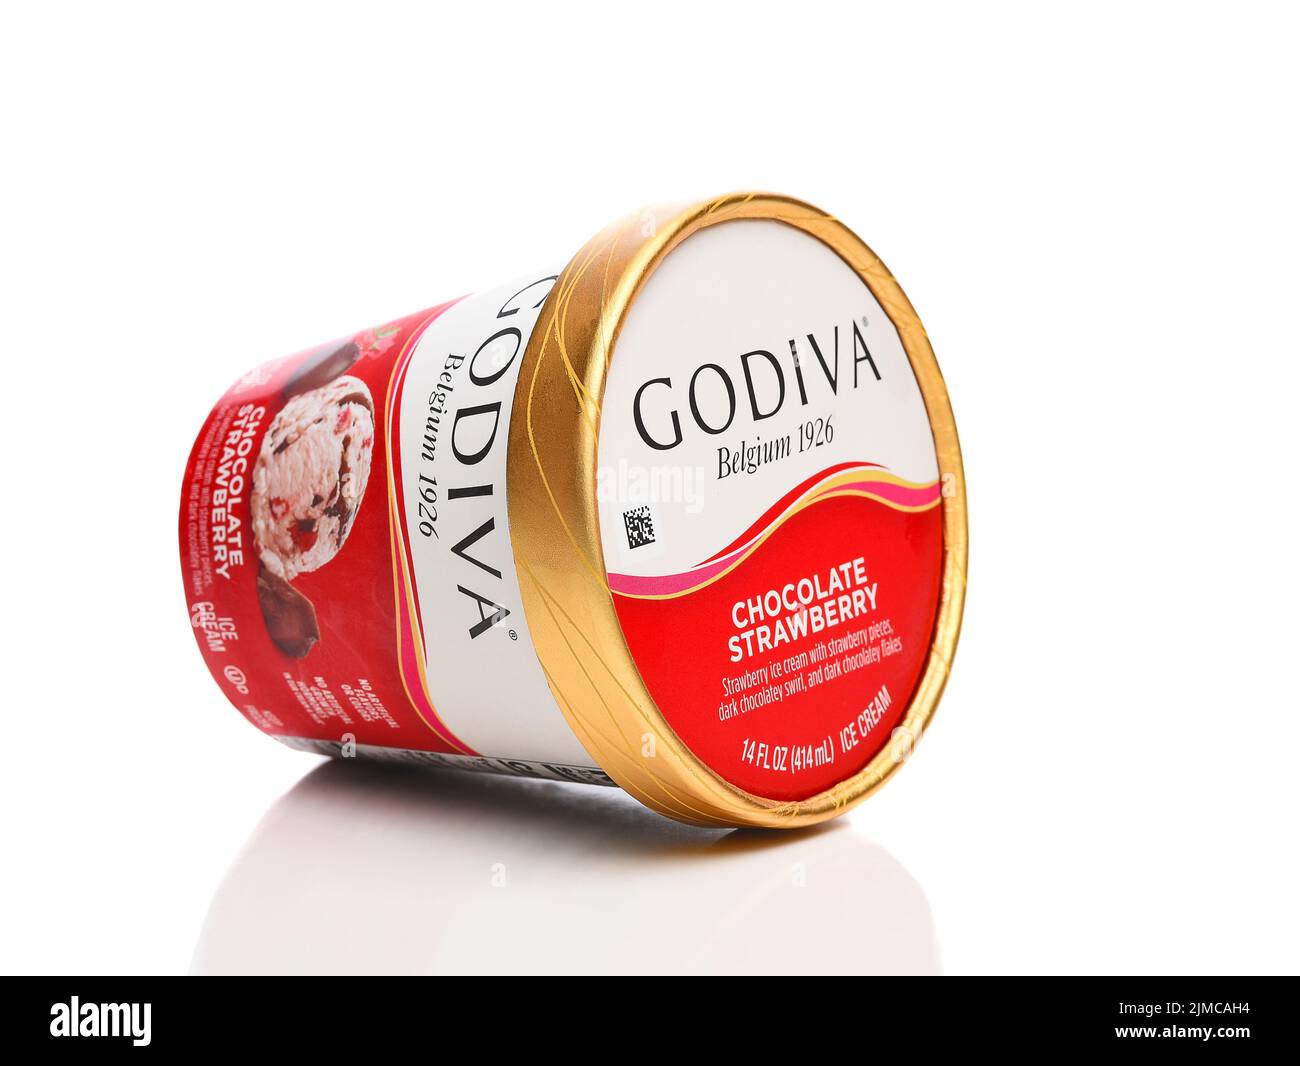 IRVINE, CALIFORNIA - 8 AGO 2022: Un cartón de 14 onzas de Godiva Chocolate Strawberry Ice Cream, vista lateral. Foto de stock